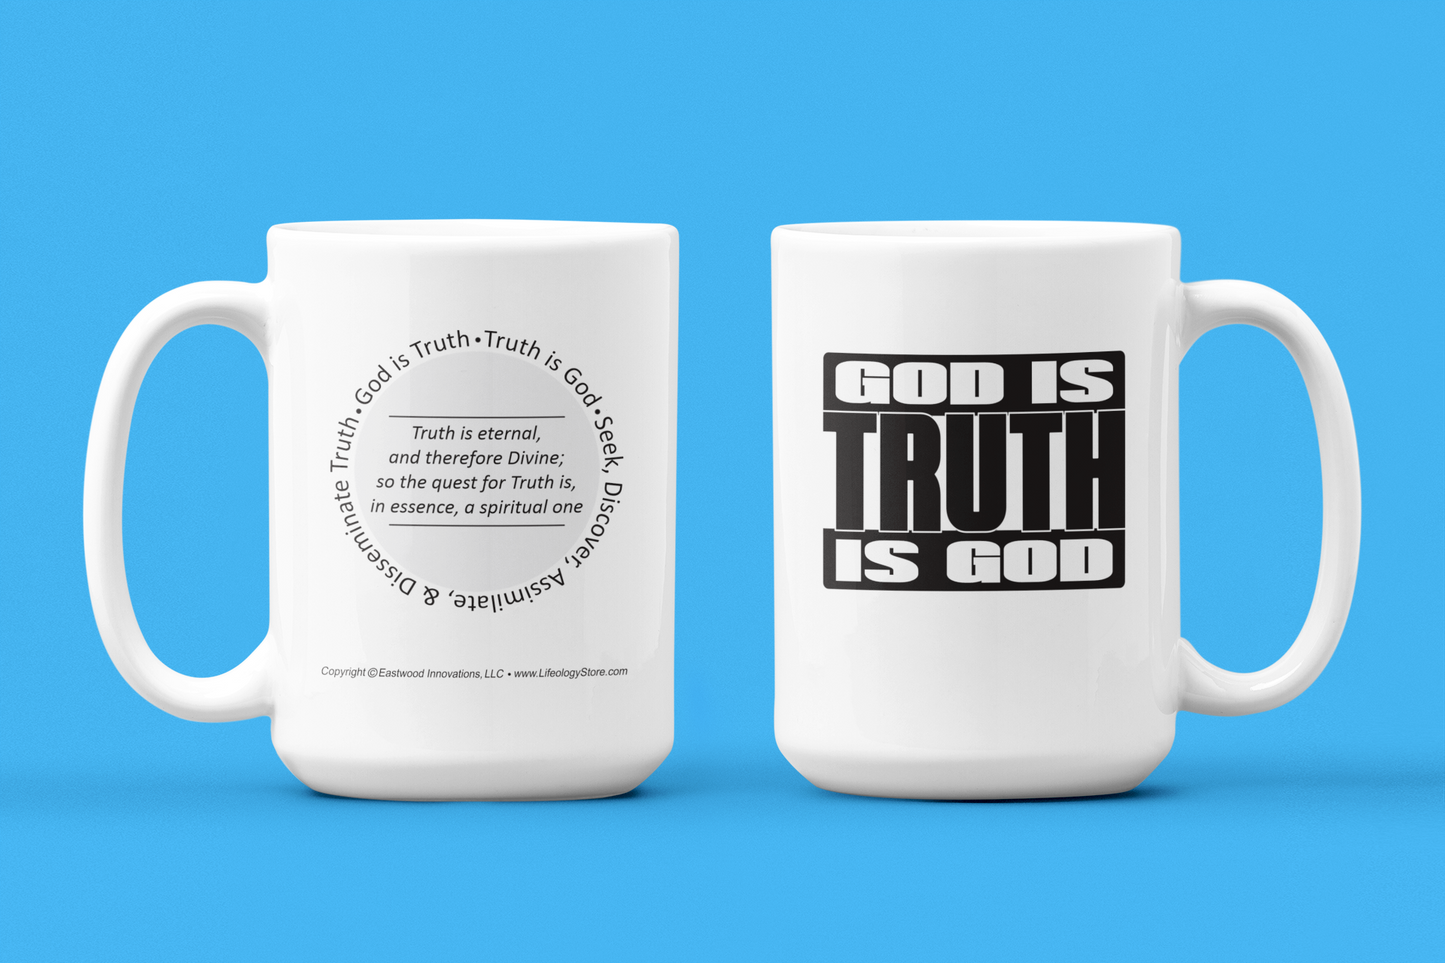 God is Truth is God Mug • LH • White